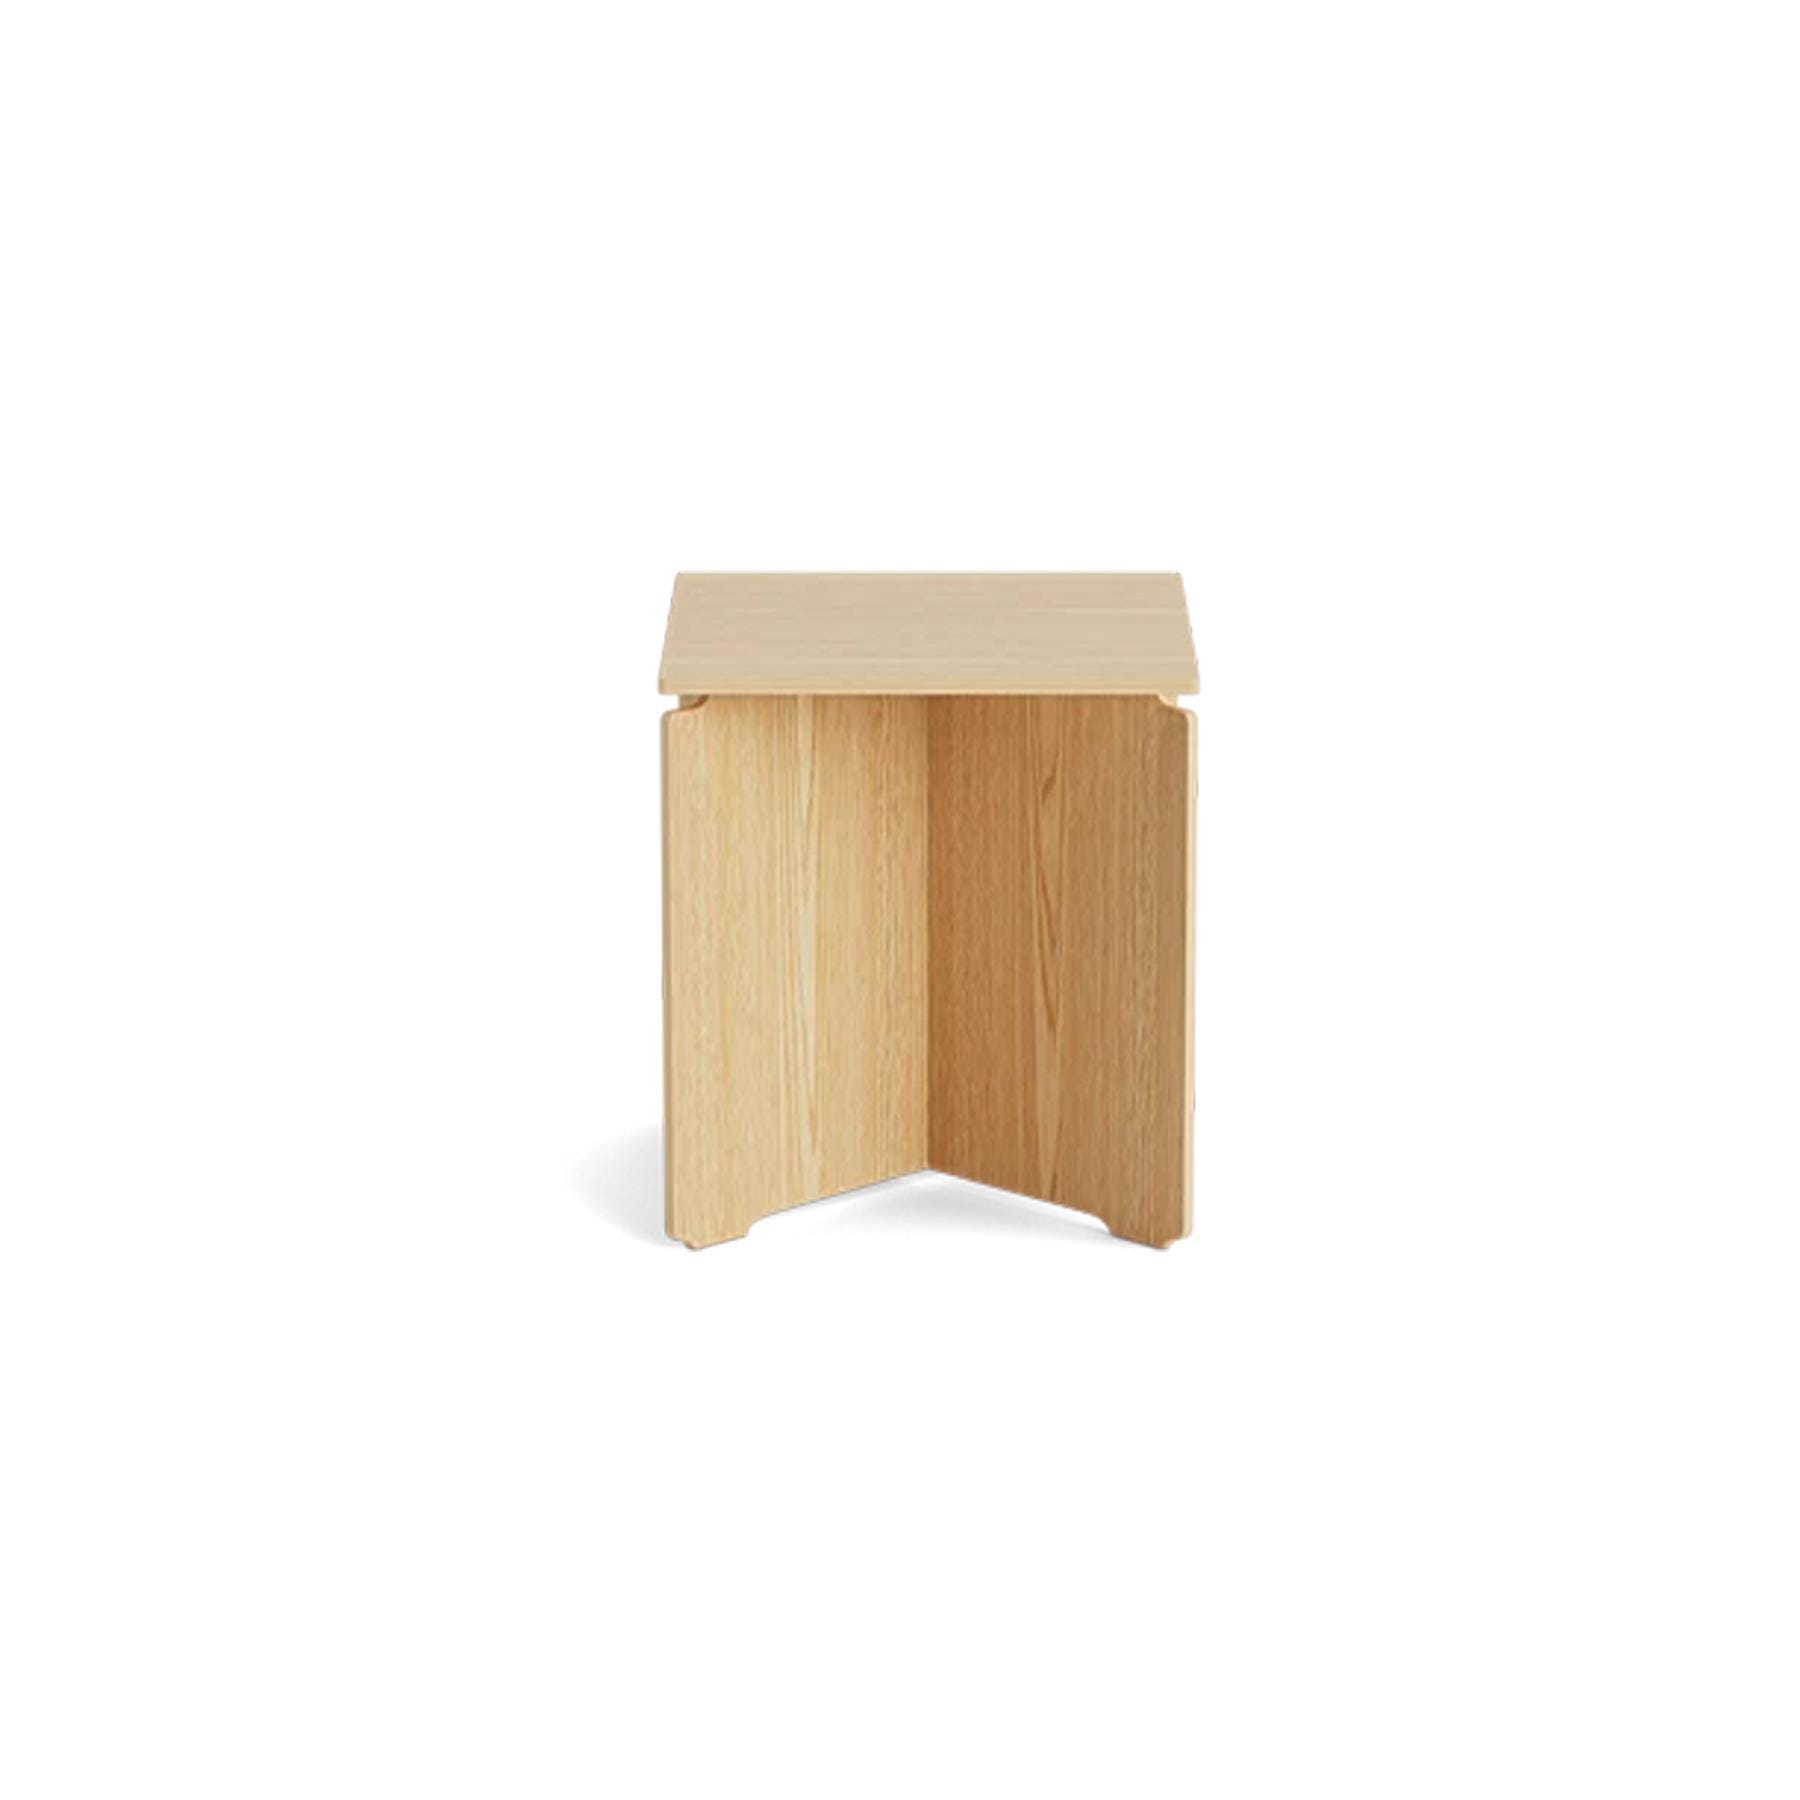 Make Nordic Crossboarder Coffee Table Natural Oak Veneer Small Light Wood Designer Furniture From Holloways Of Ludlow